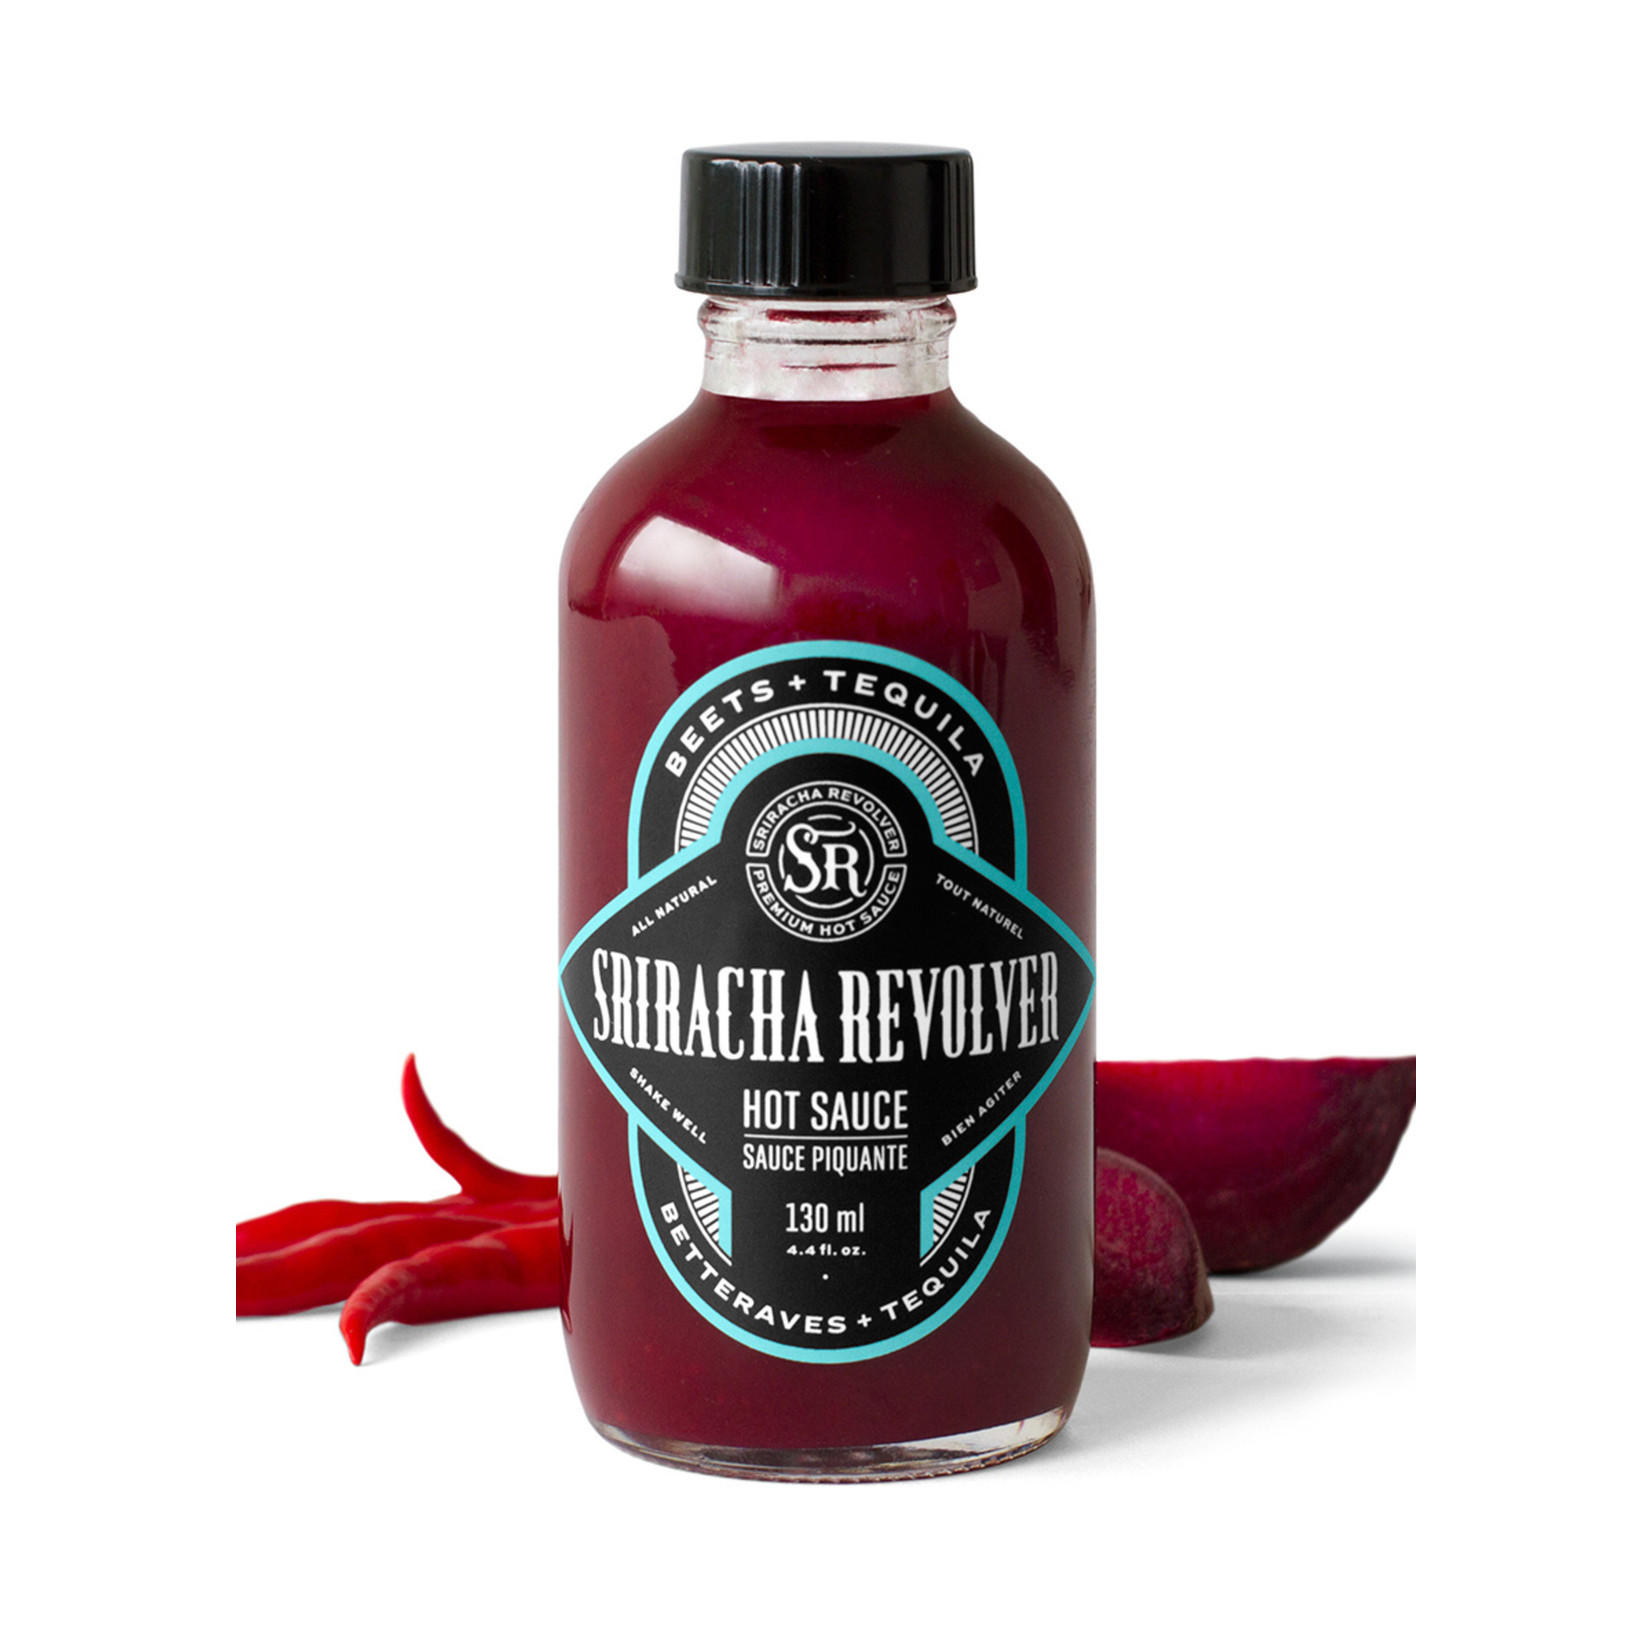 Sriracha Revolver Hot Sauce Inc. Beets & Tequila Hot Sauce